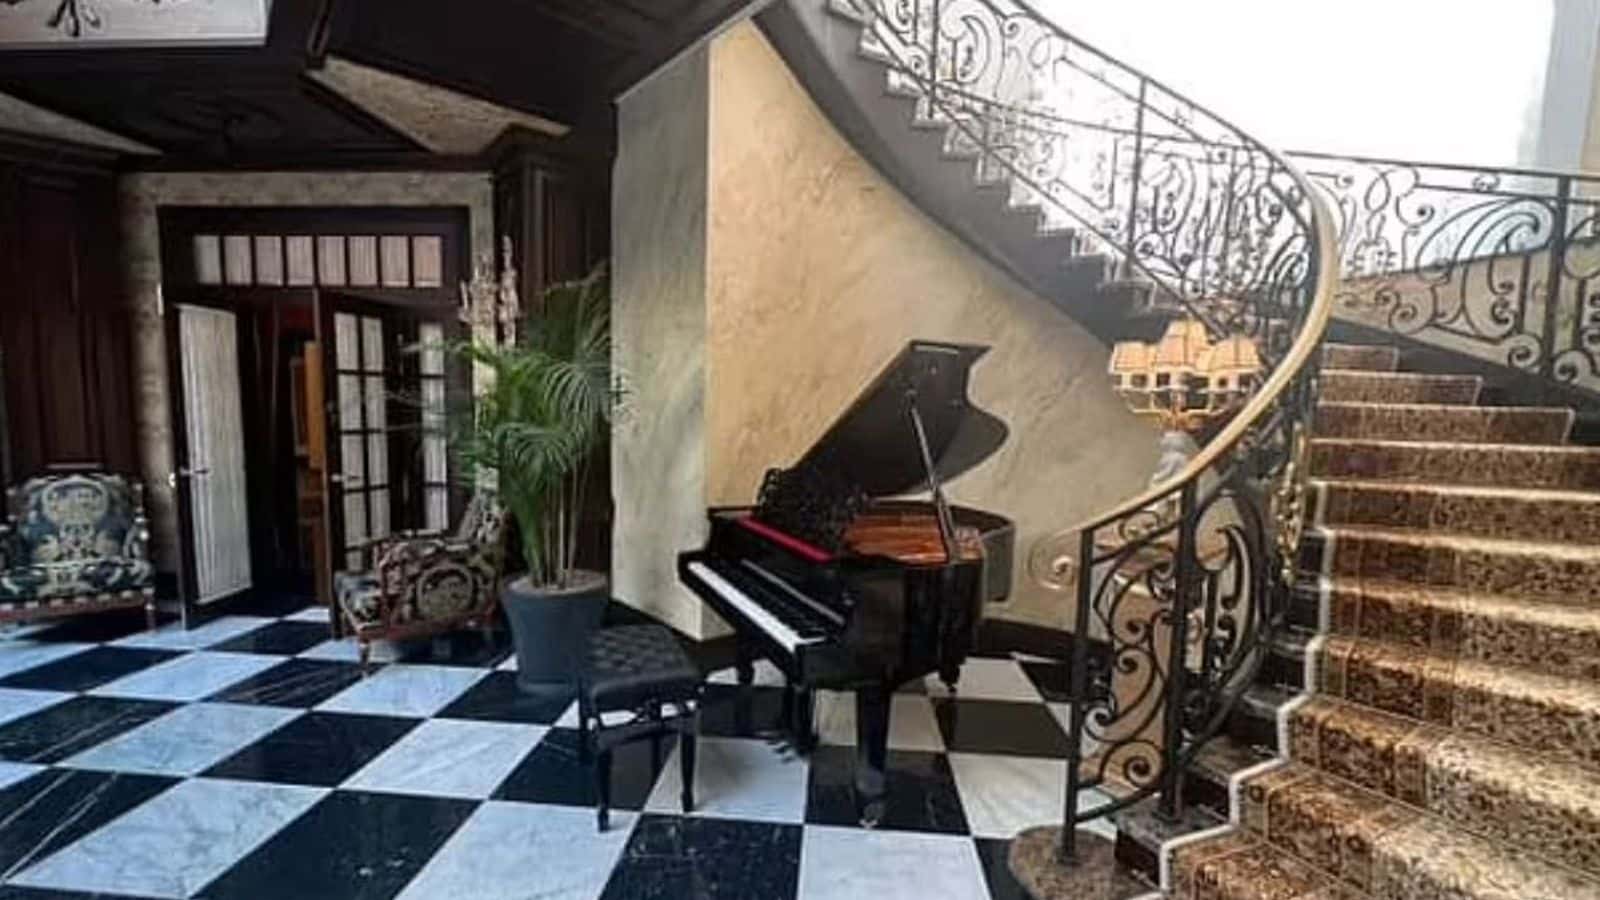 Where Prigozhin abandoned his piano